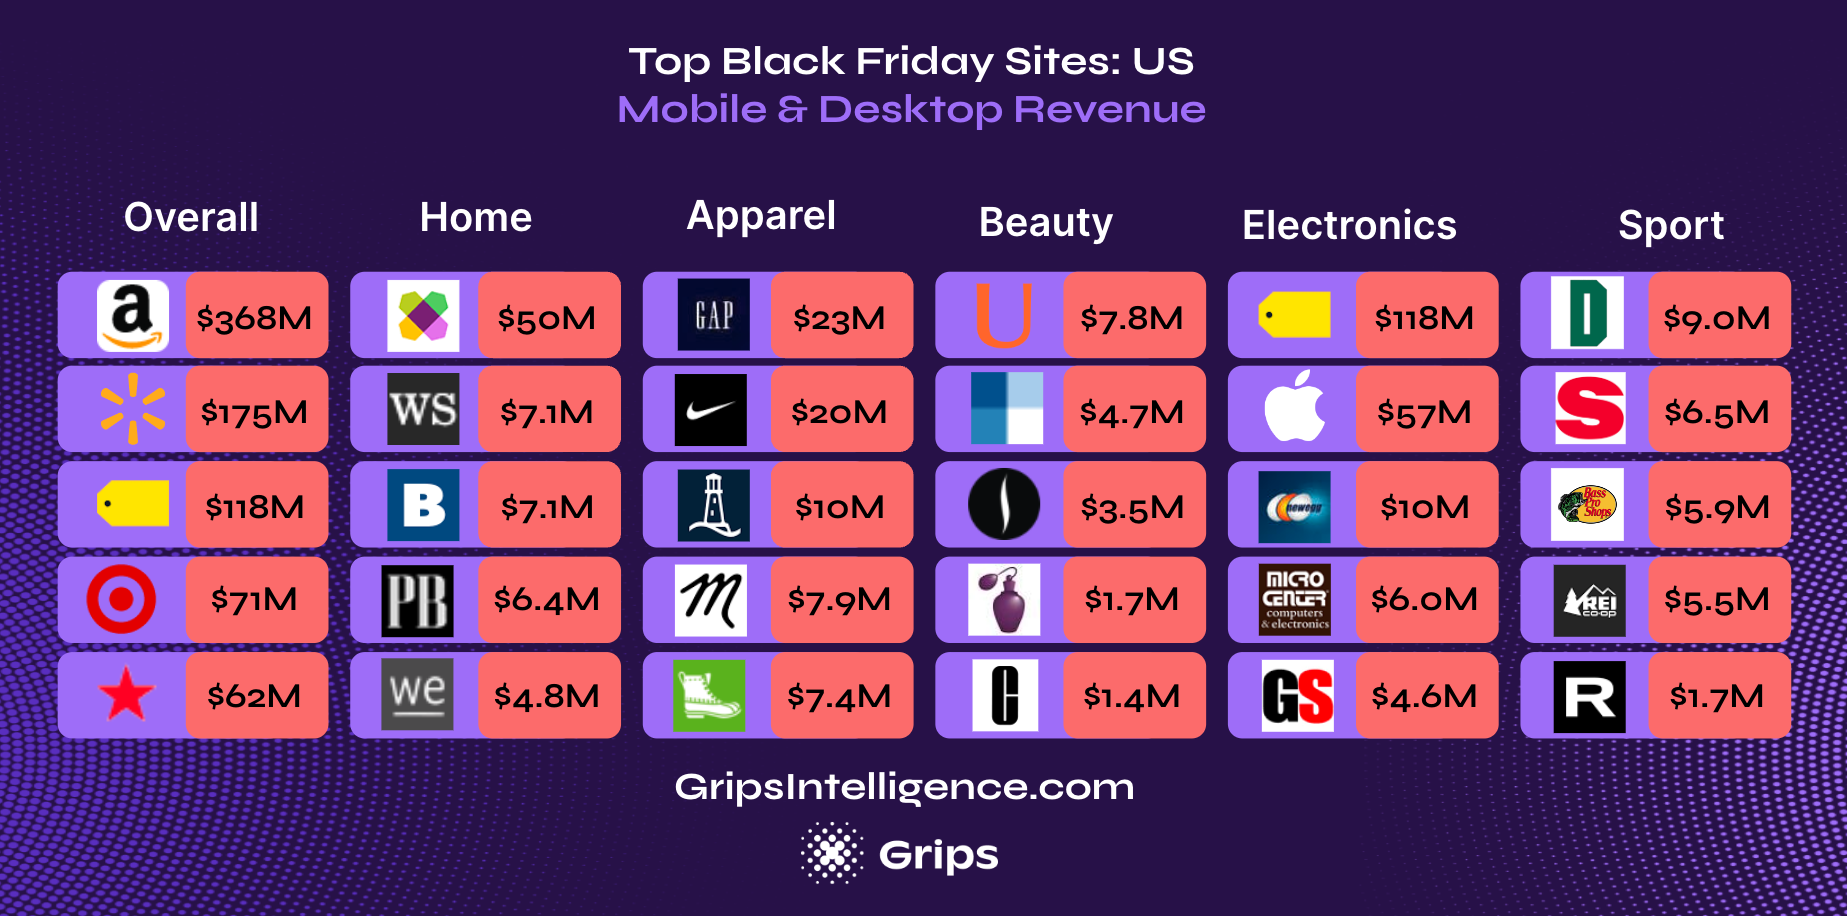 Top Black Friday e-commerce sites US